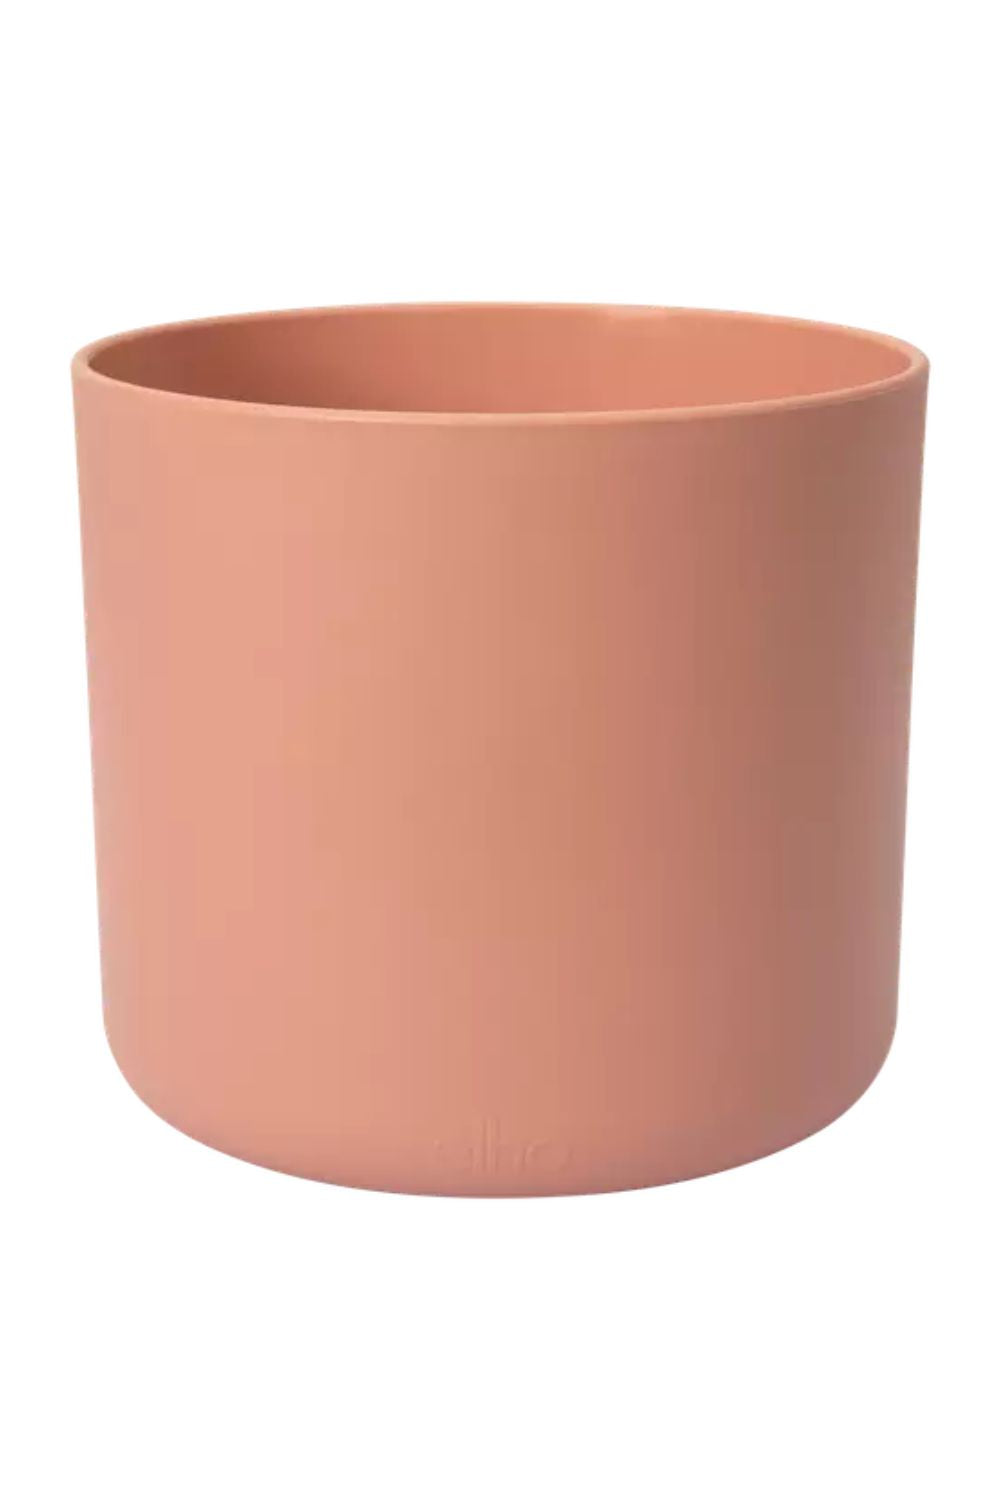 Blumentopf Elho B. for soft rund Delicate Pink 16cm